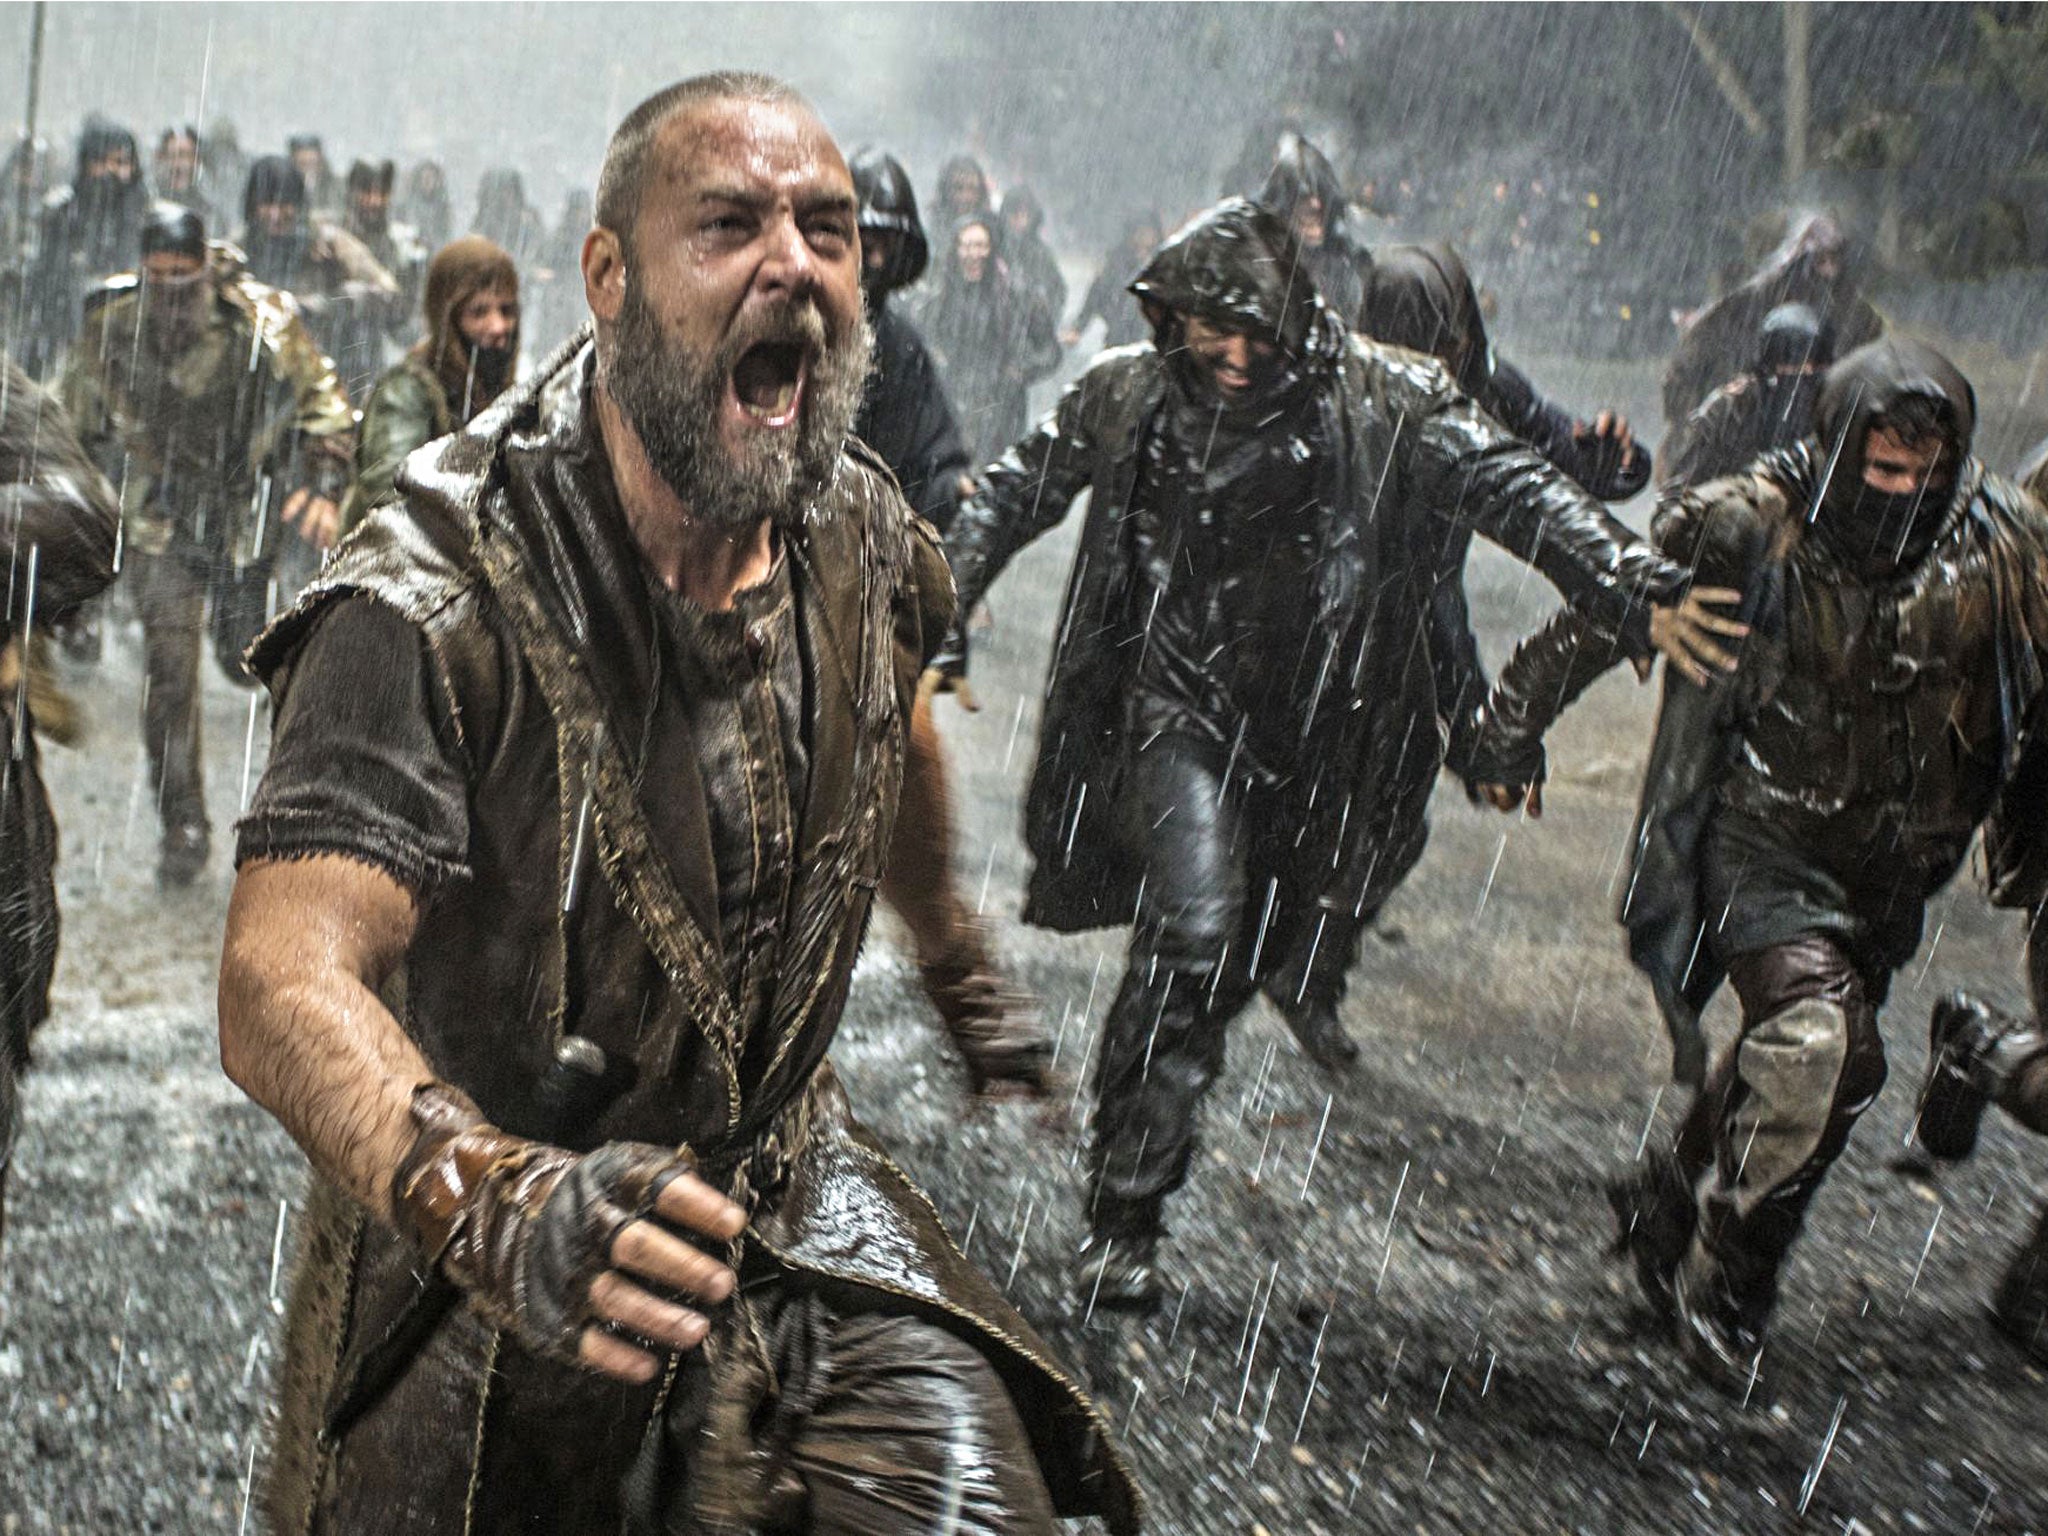 Storm warning: Russell Crowe as Noah